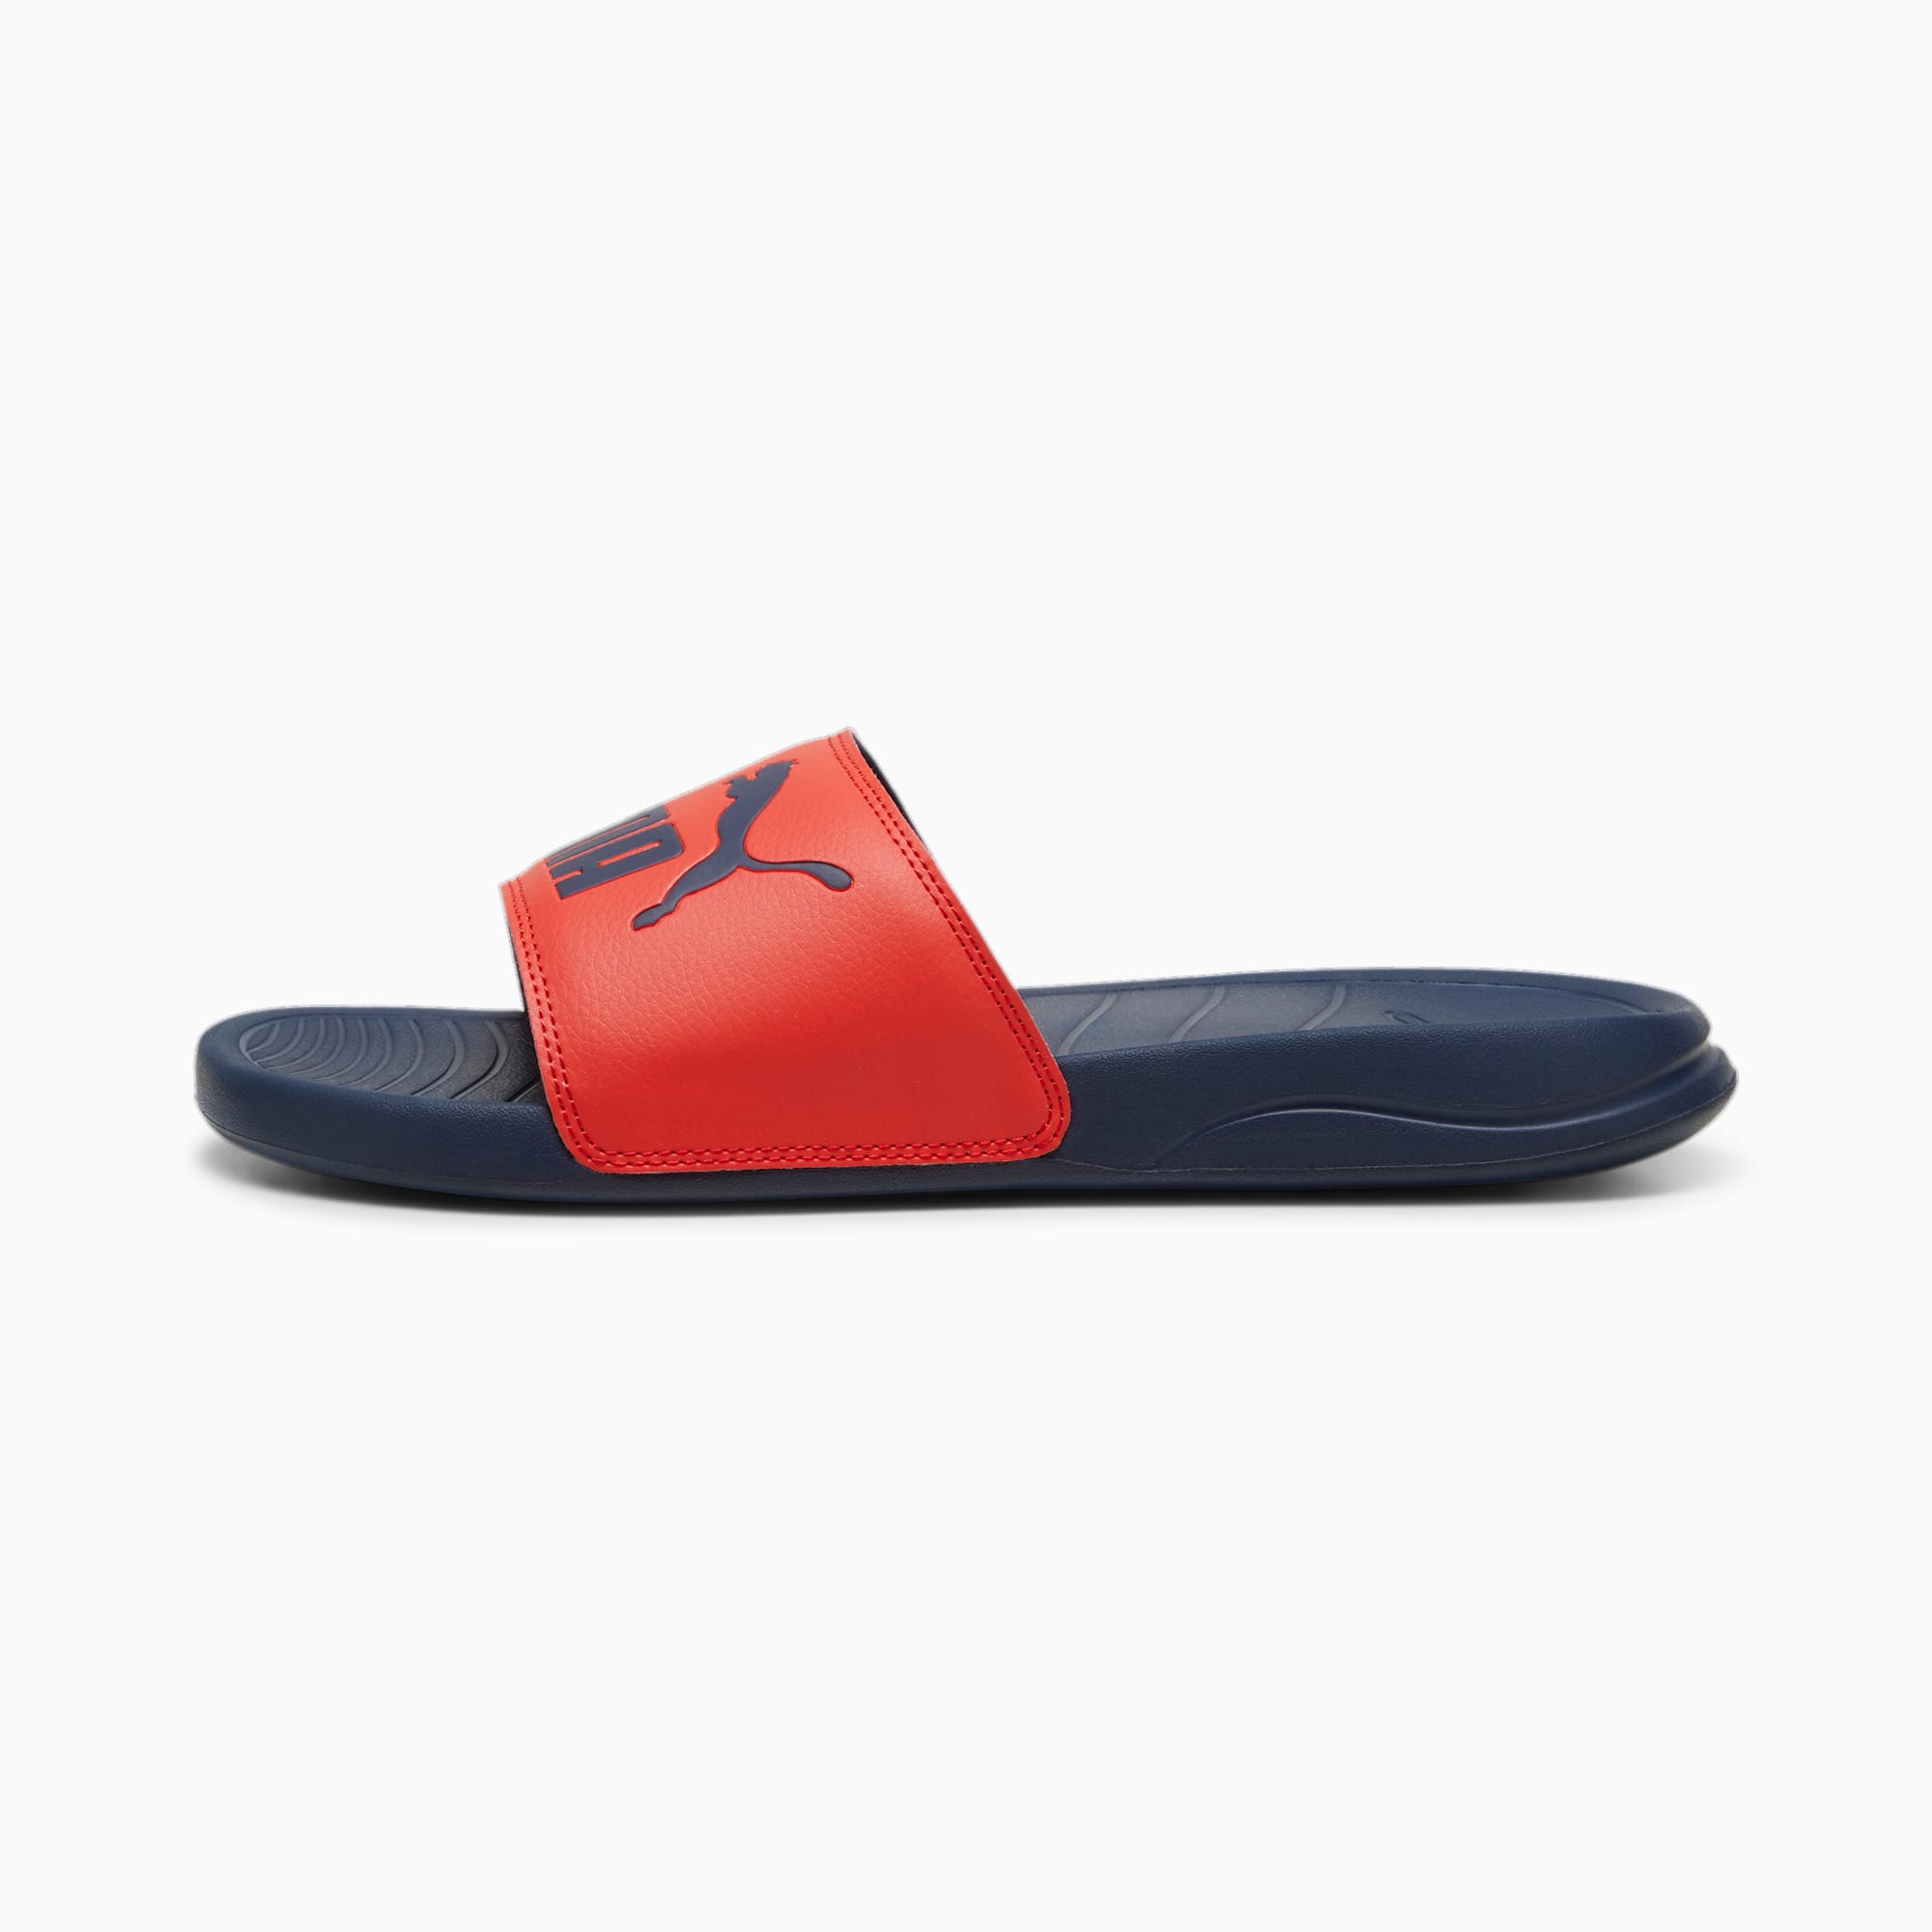 PUMA Popcat 20 Sandalen, Rot/Blau, Größe: 48.5, Schuhe